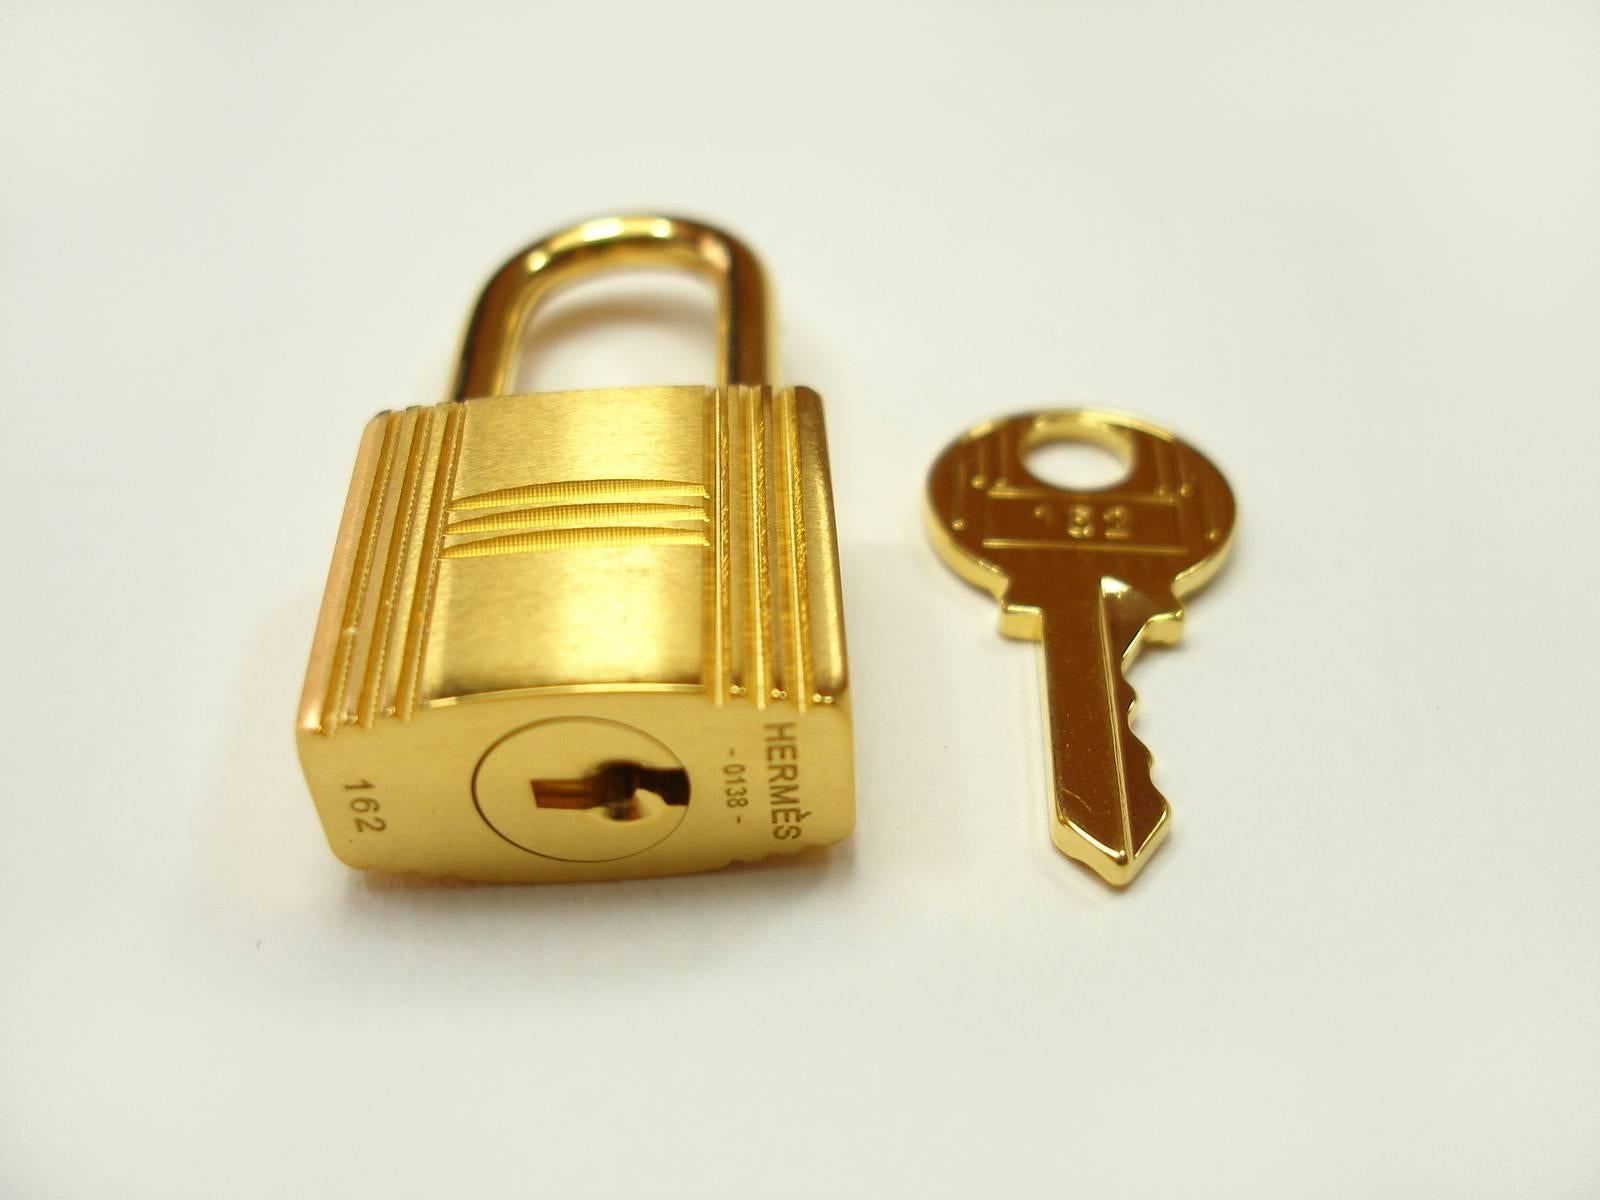 Hermès Cadenas Lock 2 Keys For Birkin or Kelly bag Gold plated shiny and brushed 9